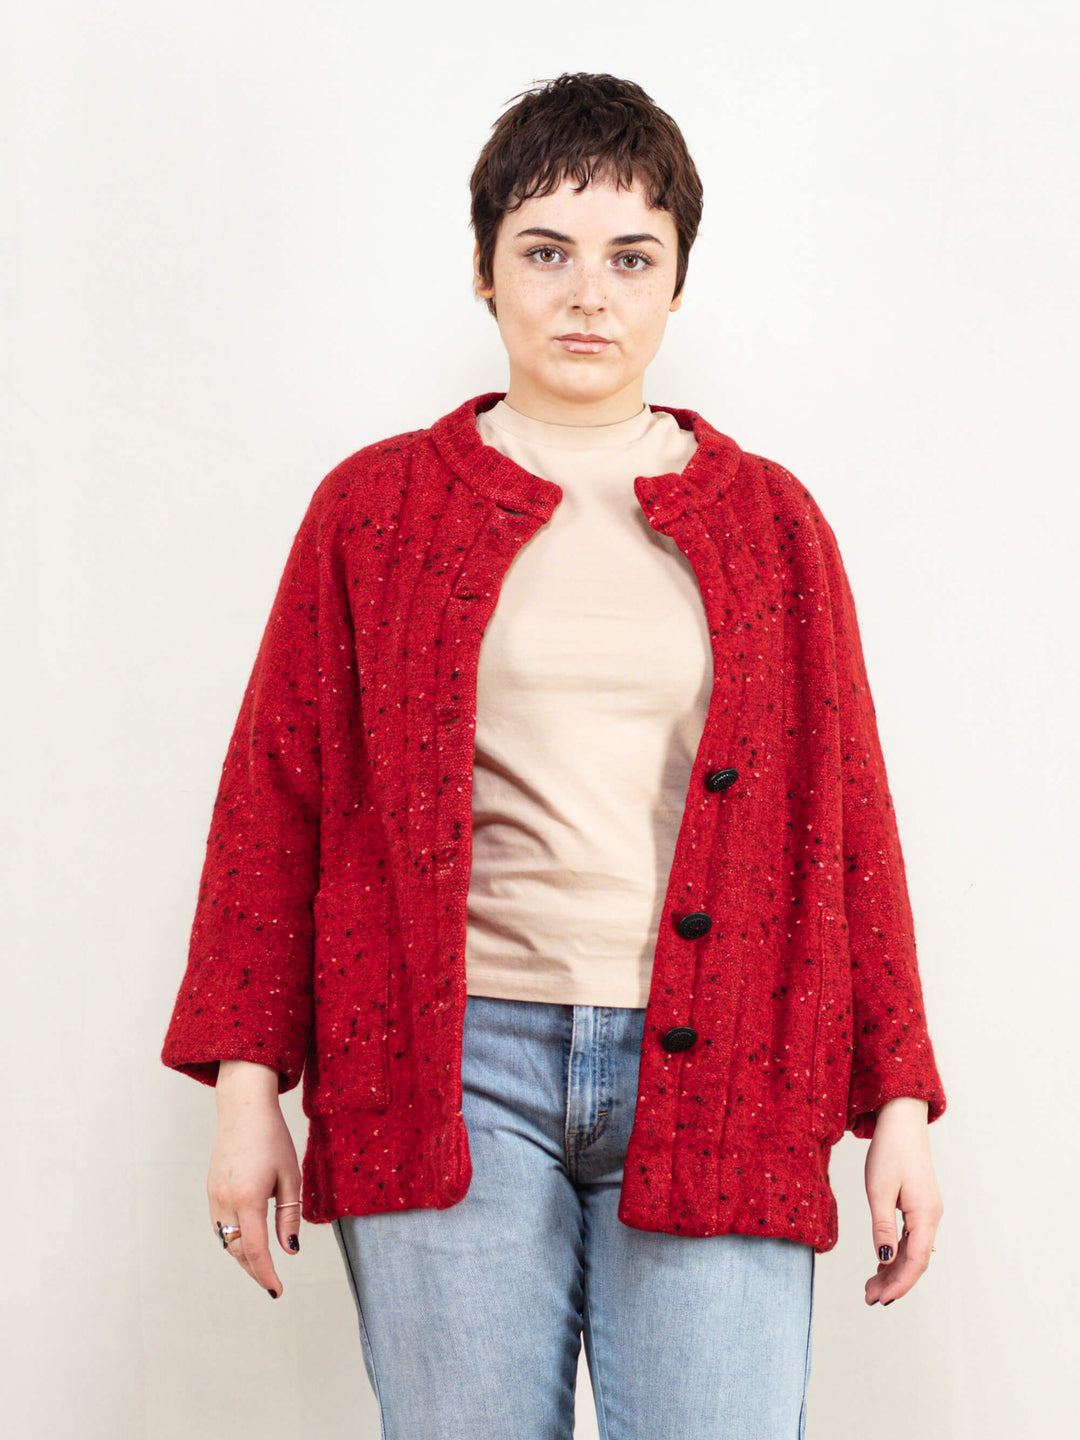 Pierre Cardin 70s Jacket women vintage wool blend red collarless blazer jacket short coat designer vintage clothing women size large